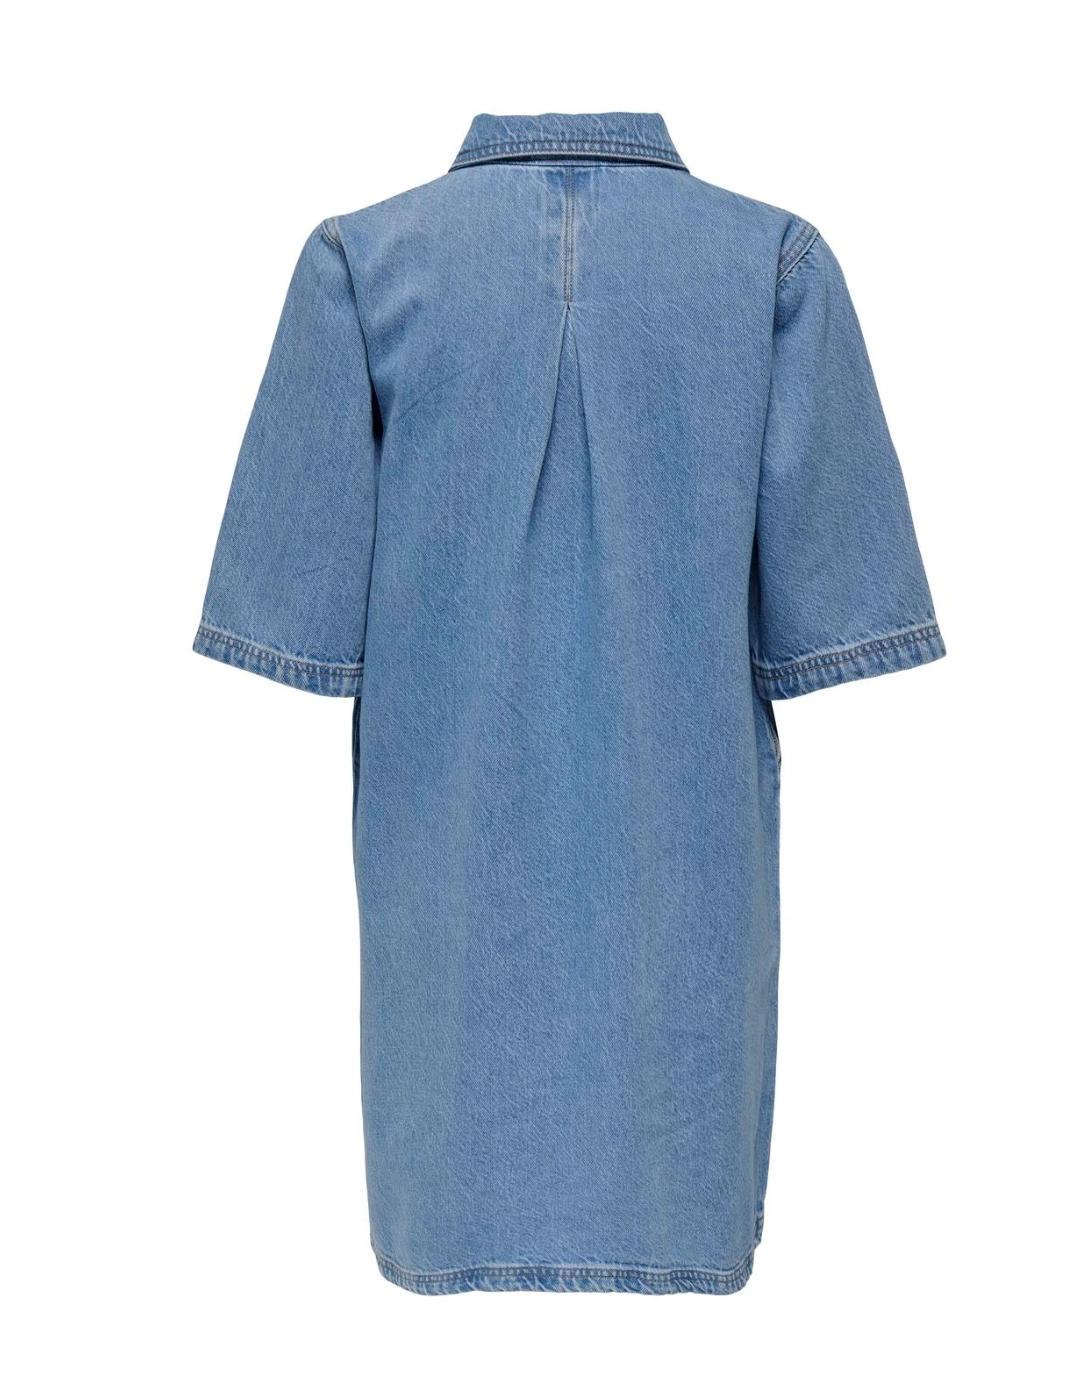 Vestido Only Gry denim azul corto regular fit para mujer